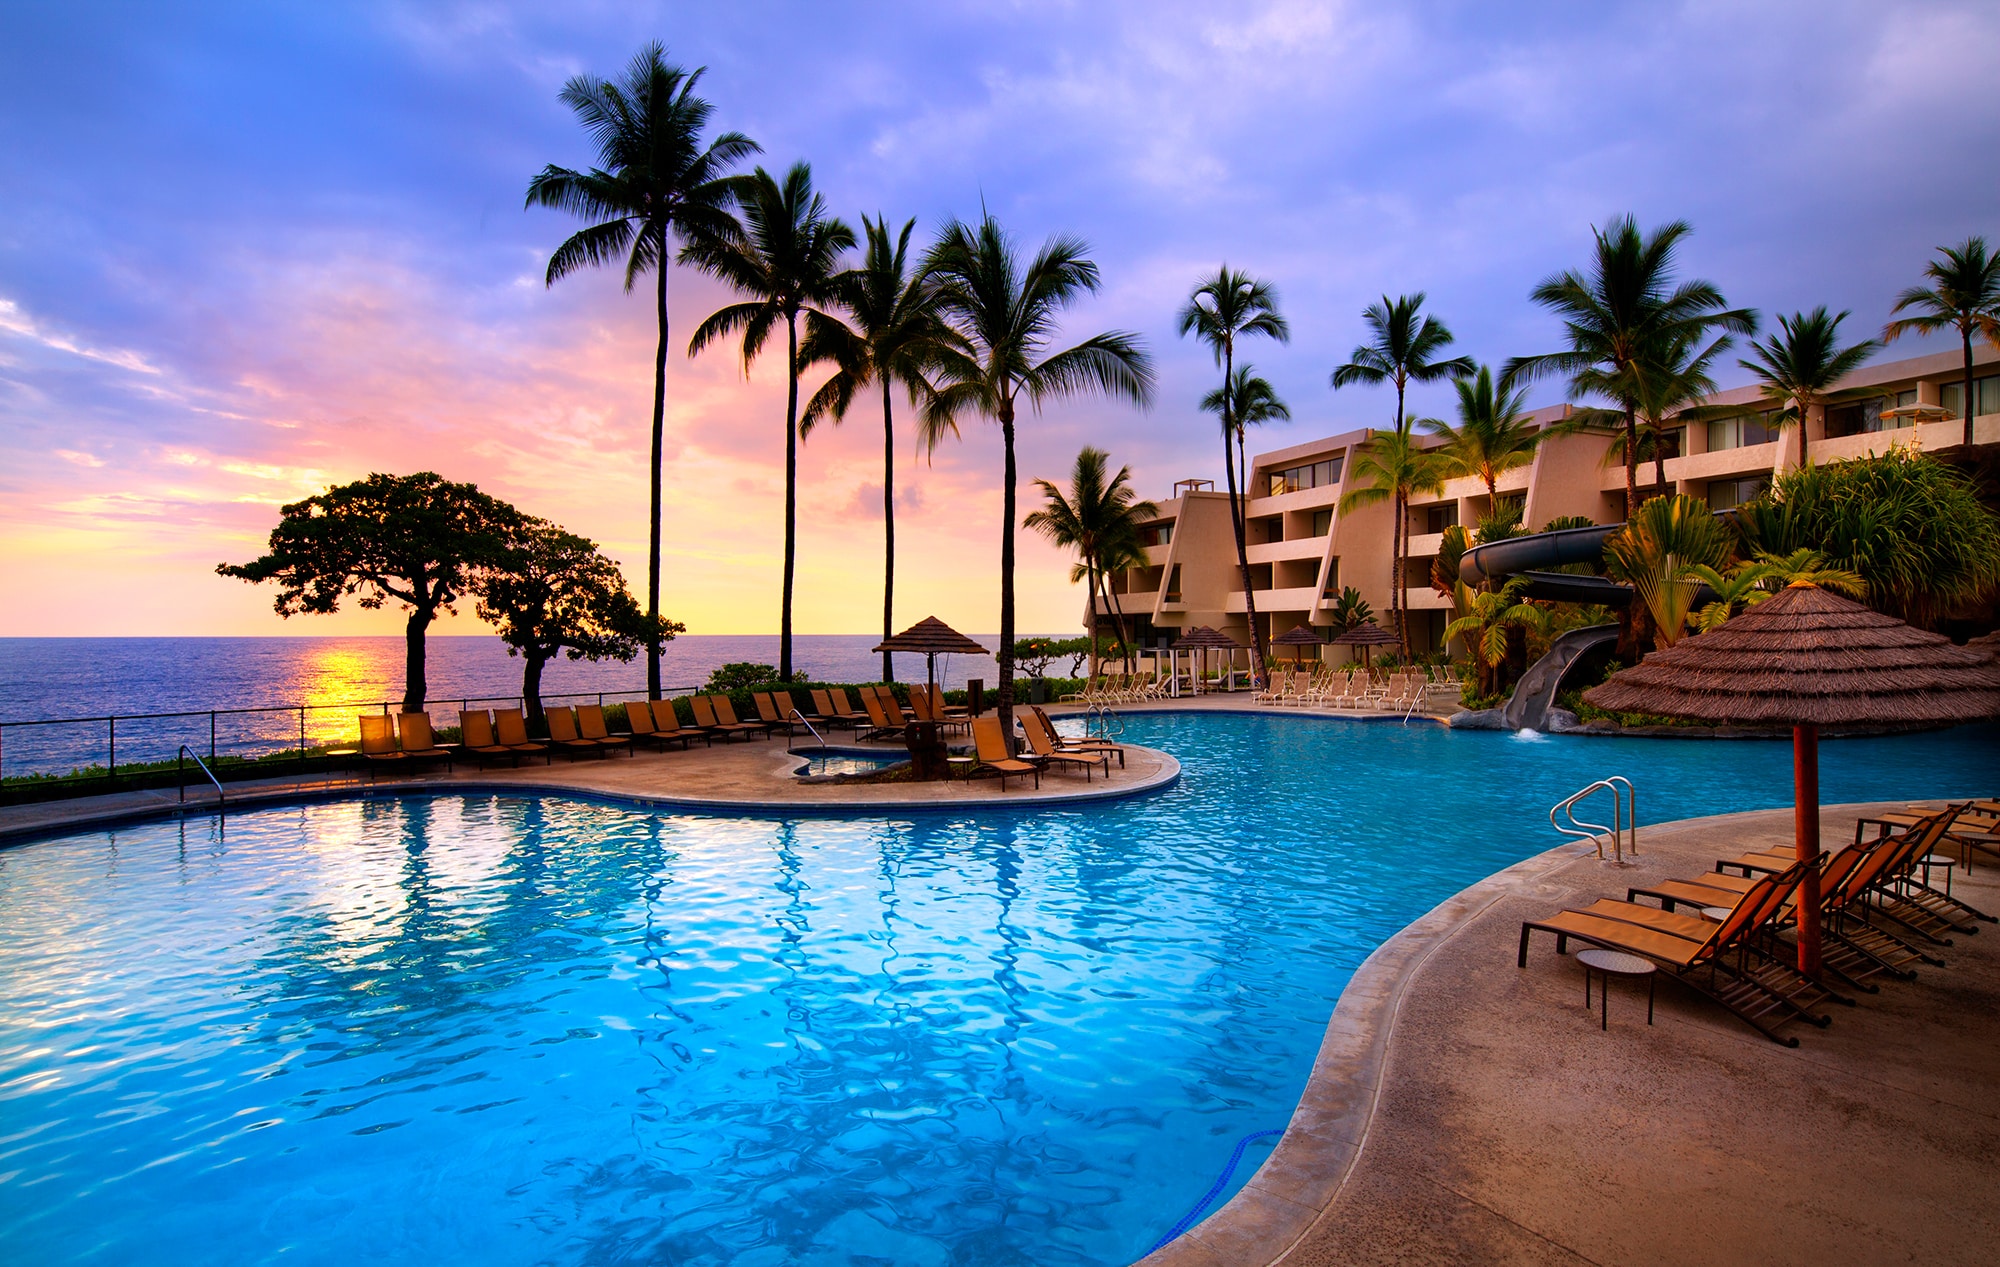 Romantic Big Island Hawaii Hotels for Couples: Sheraton Kona Resort & Spa at Keauhou Bay